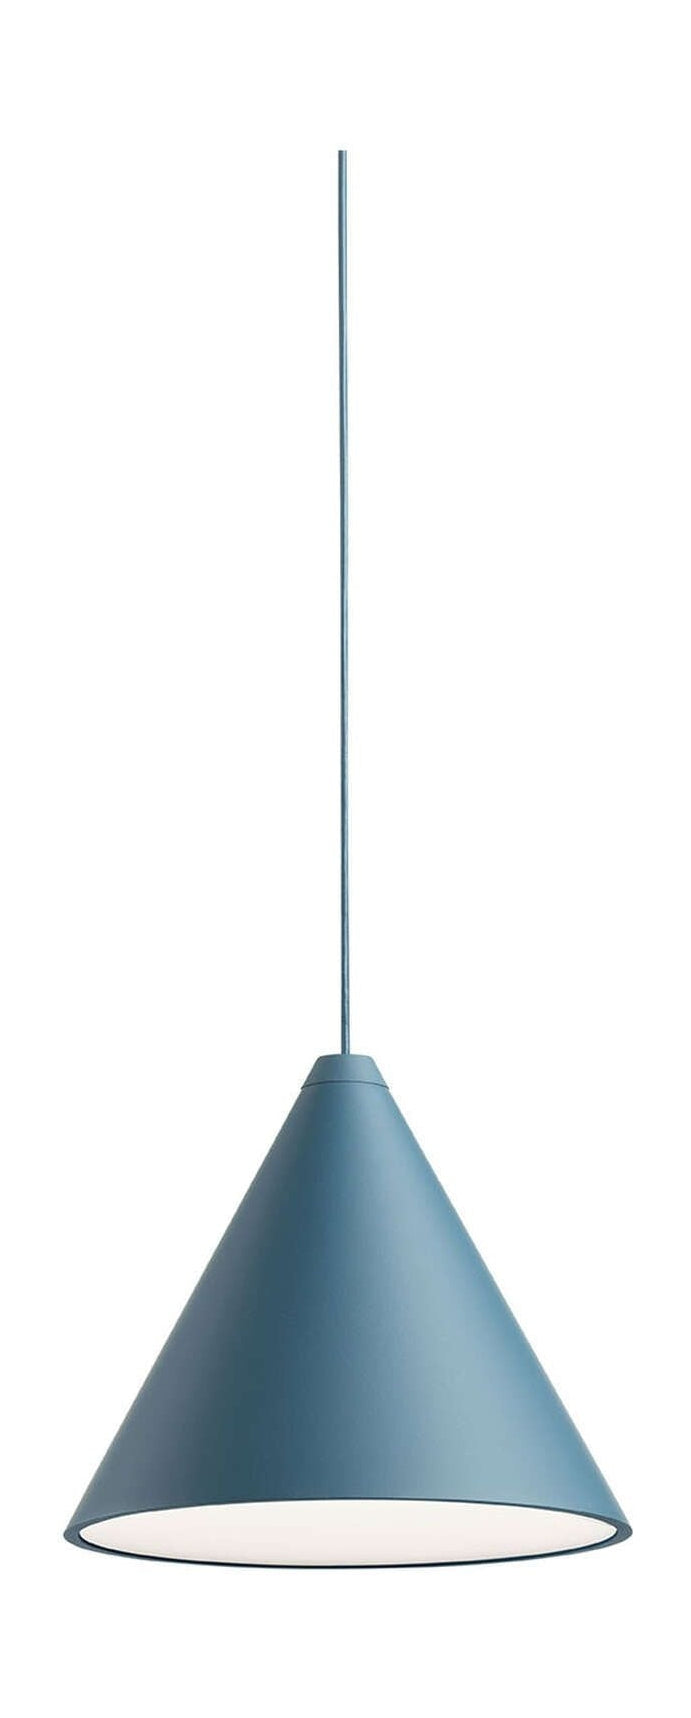 Flos String Light Cone Head Pendant lampe Bluetooth 12 m, bleu